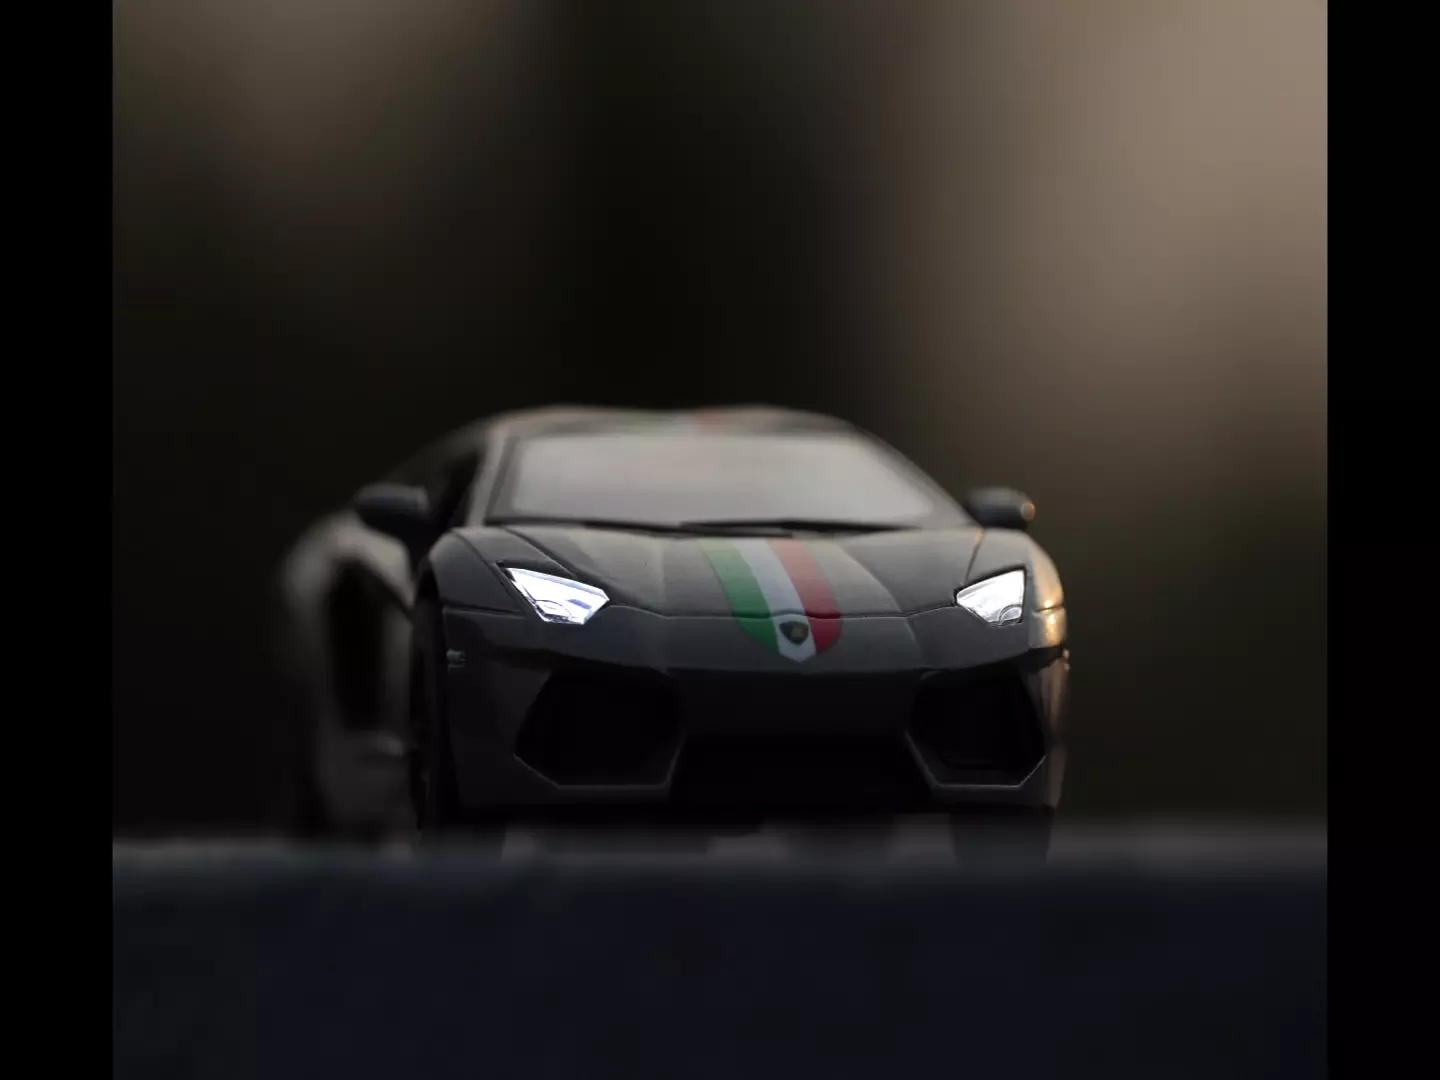 Signal lights on a Lamborghini